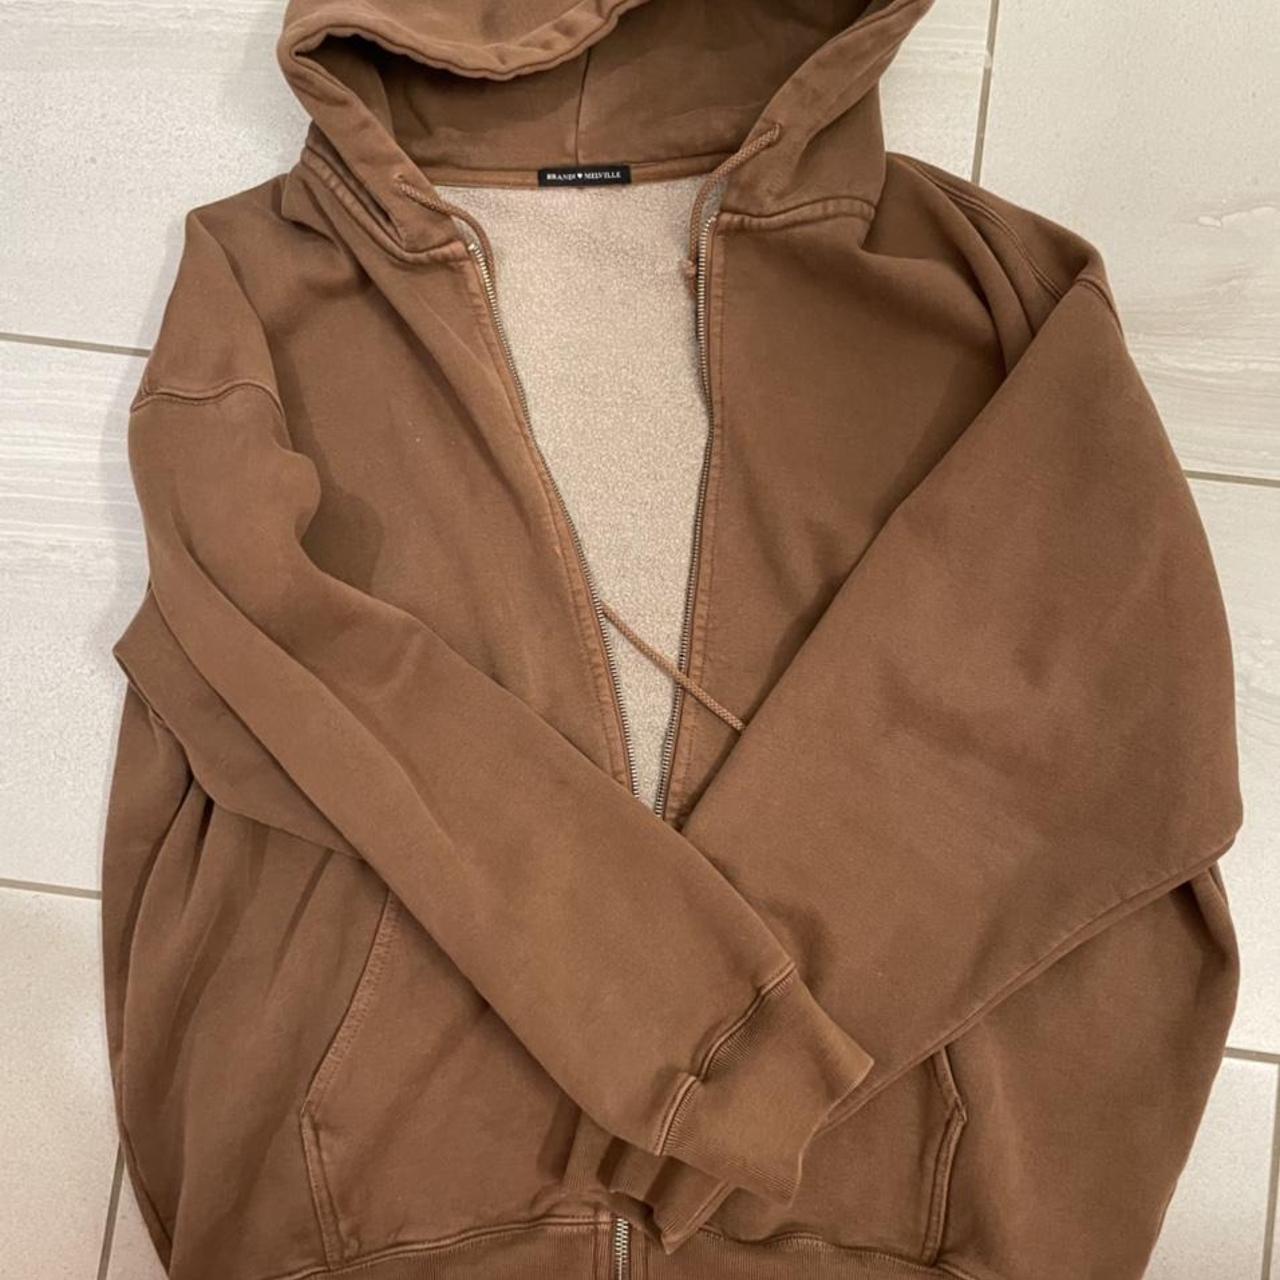 Brandy Melville zip up brown Arden hoodie 🤎 great - Depop